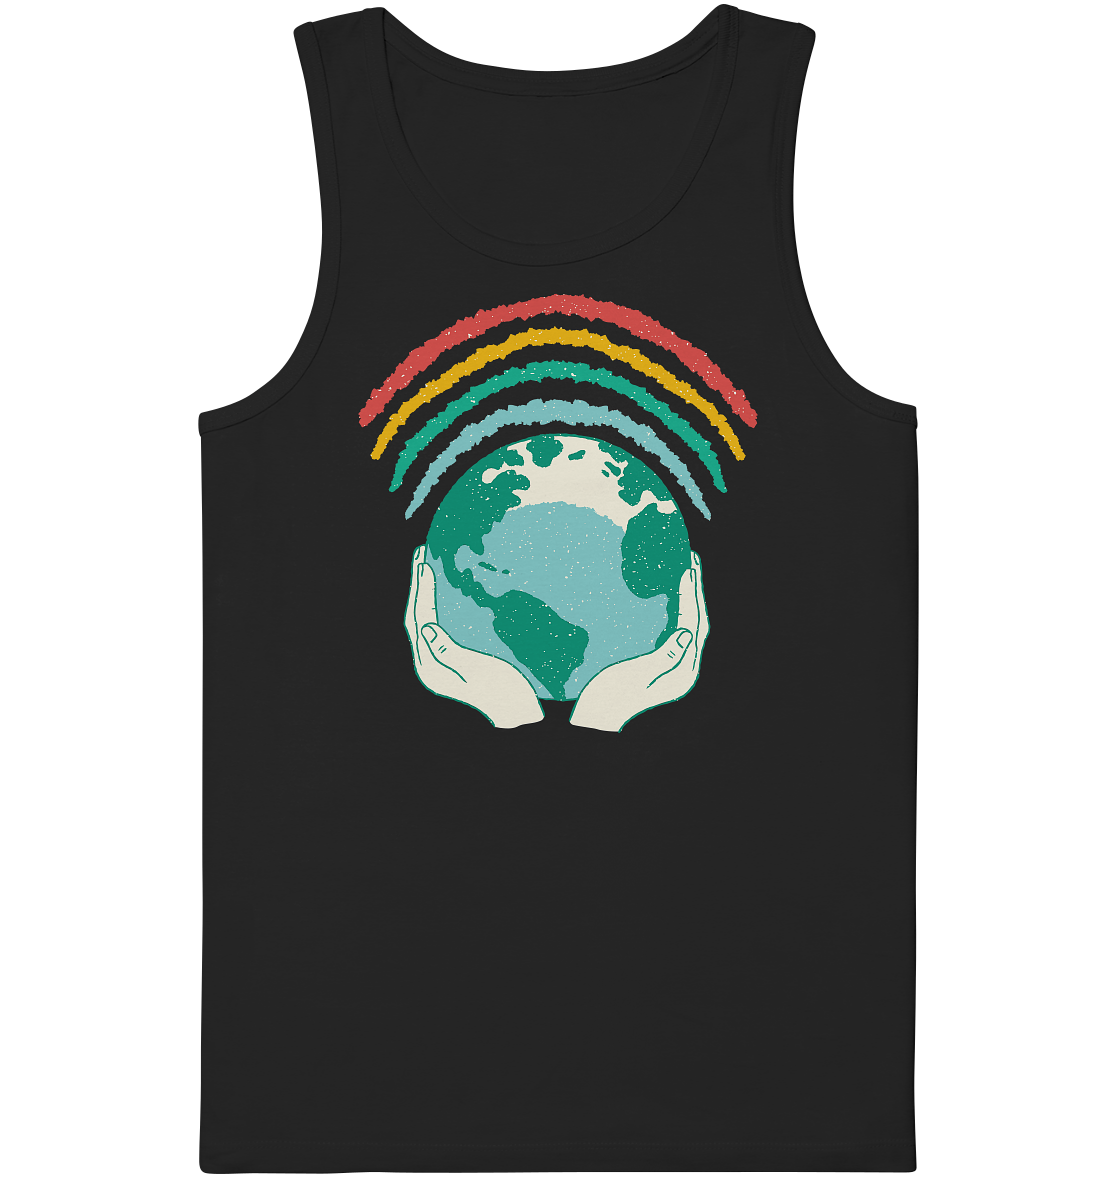 Rainbow with globe in hands - organic tank top